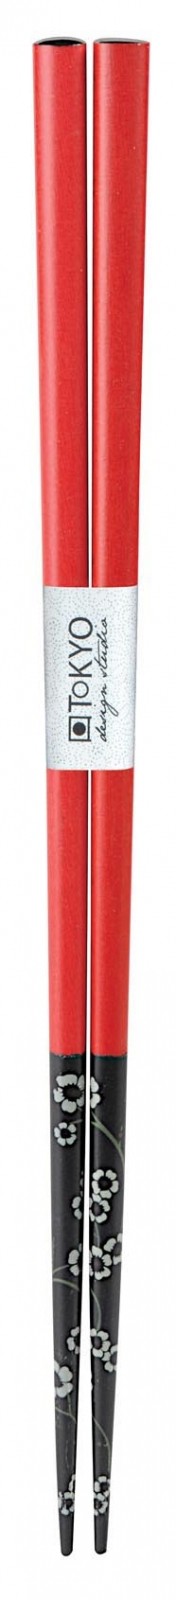 Chopstick Red / Black with Flower - 23 cm